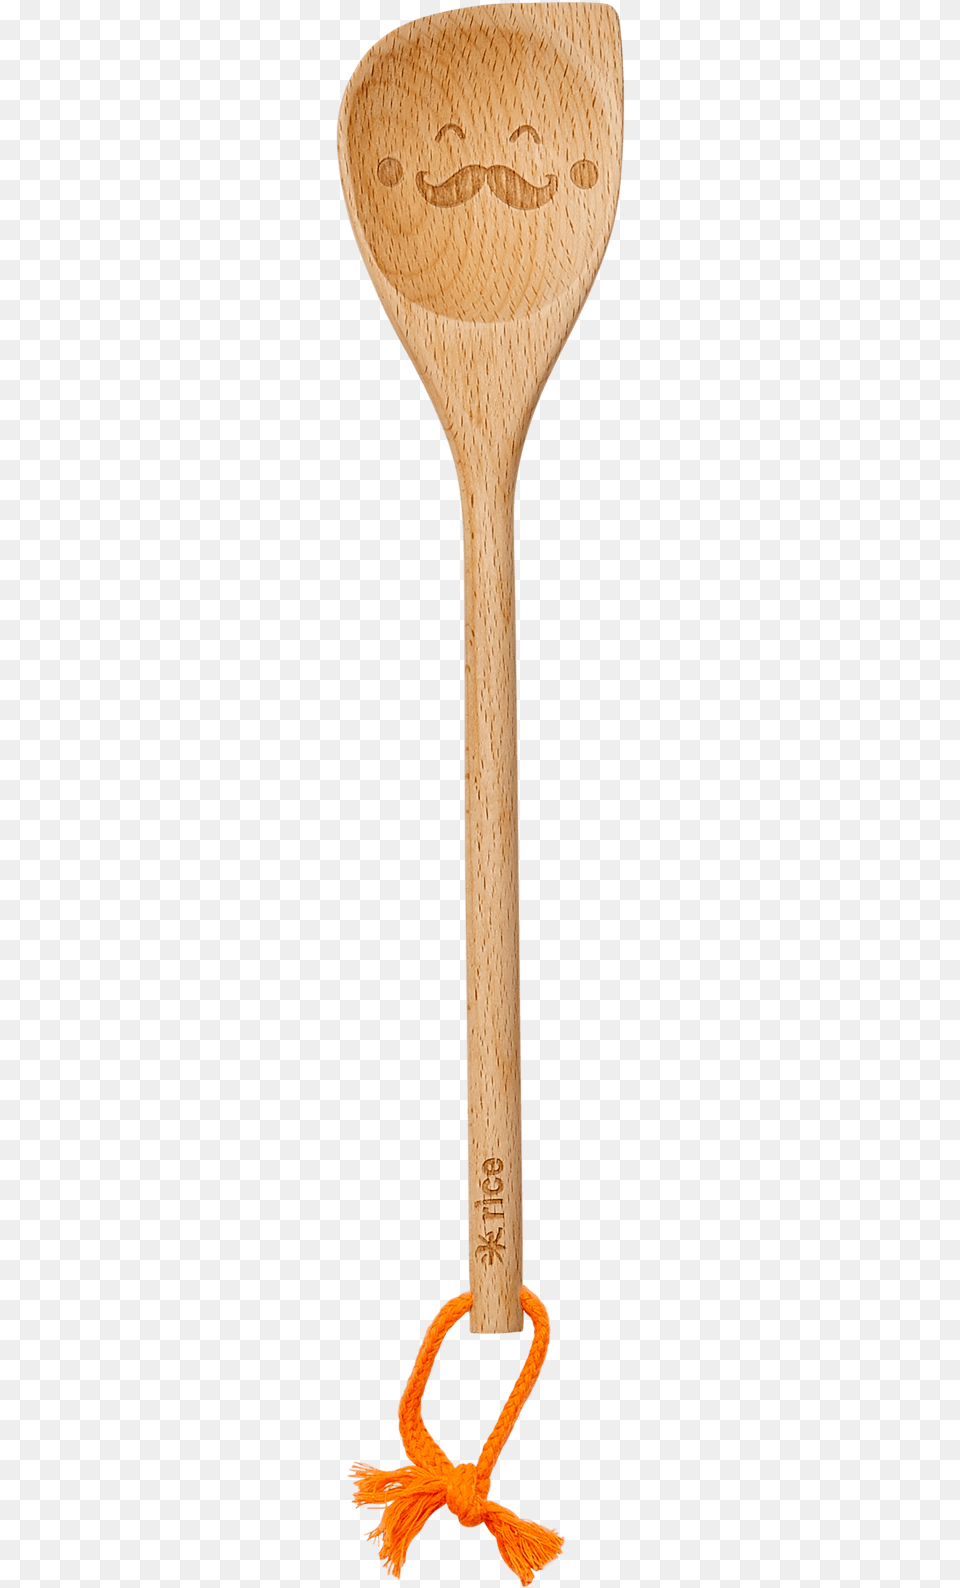 Wooden Spoon, Cutlery, Kitchen Utensil, Wooden Spoon Png Image